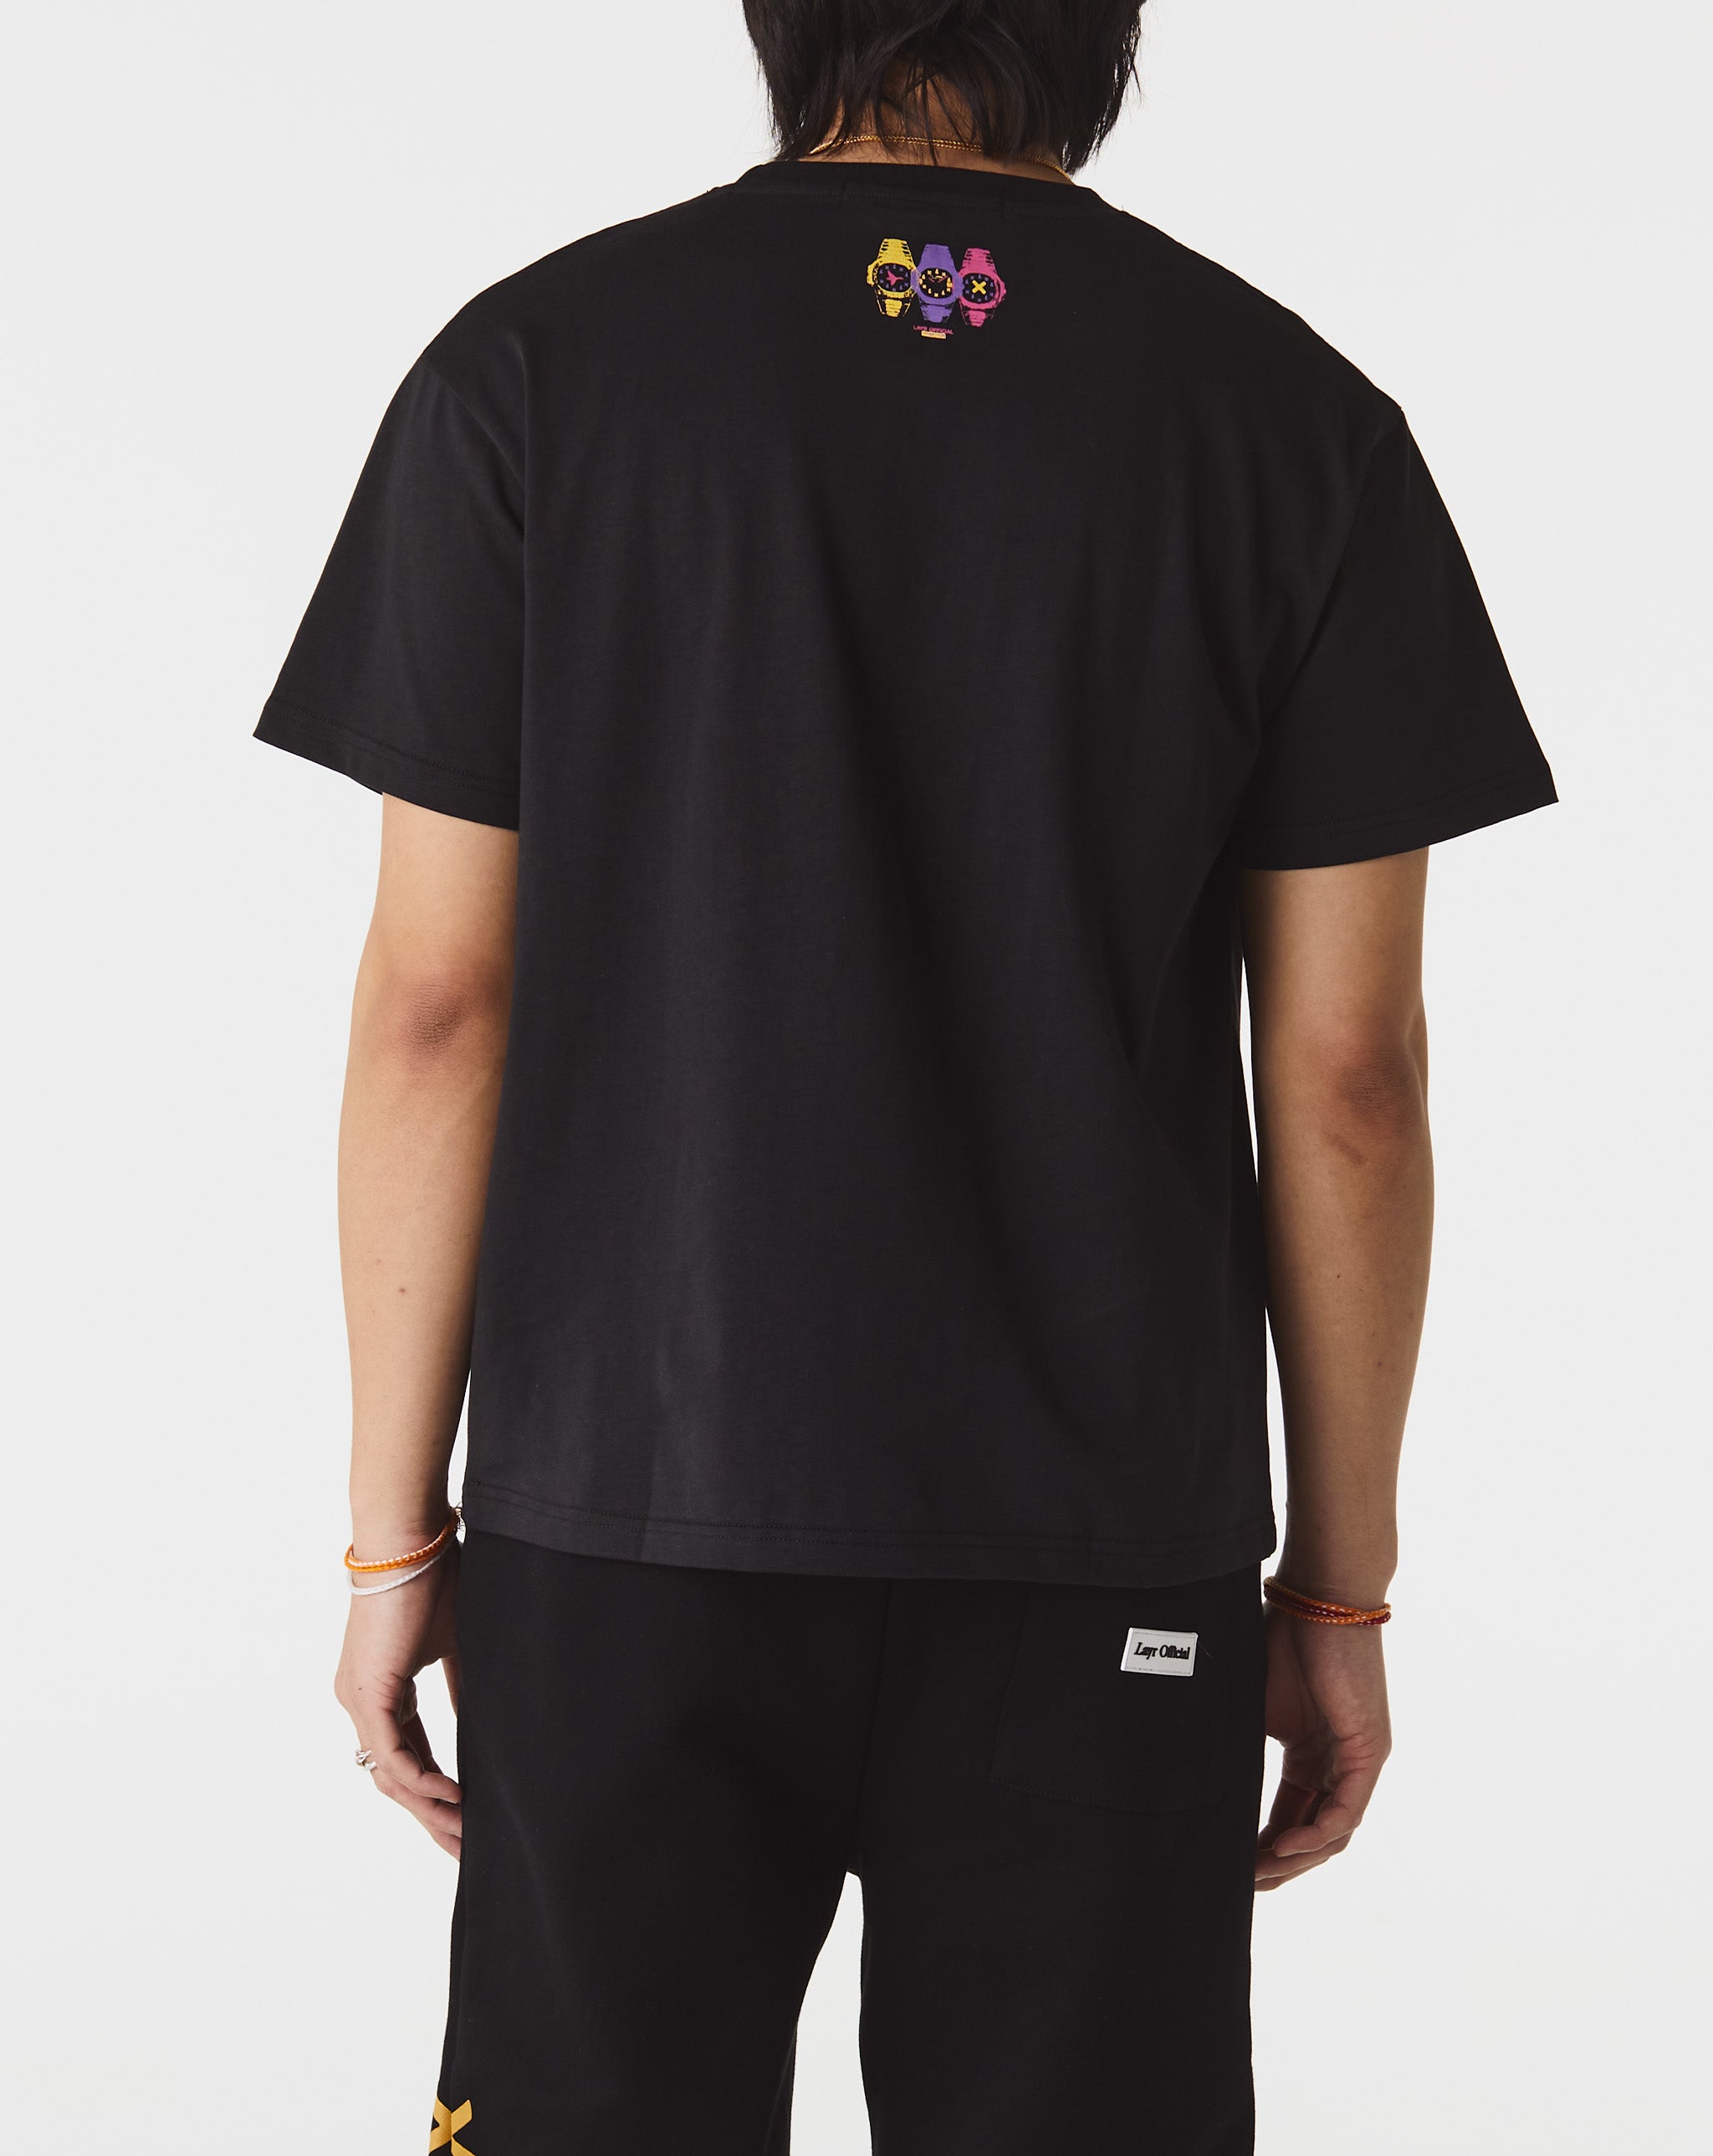 Layr Offical Fuchsia Sweatshirt For Girl With Logo  - Cheap Urlfreeze Jordan outlet